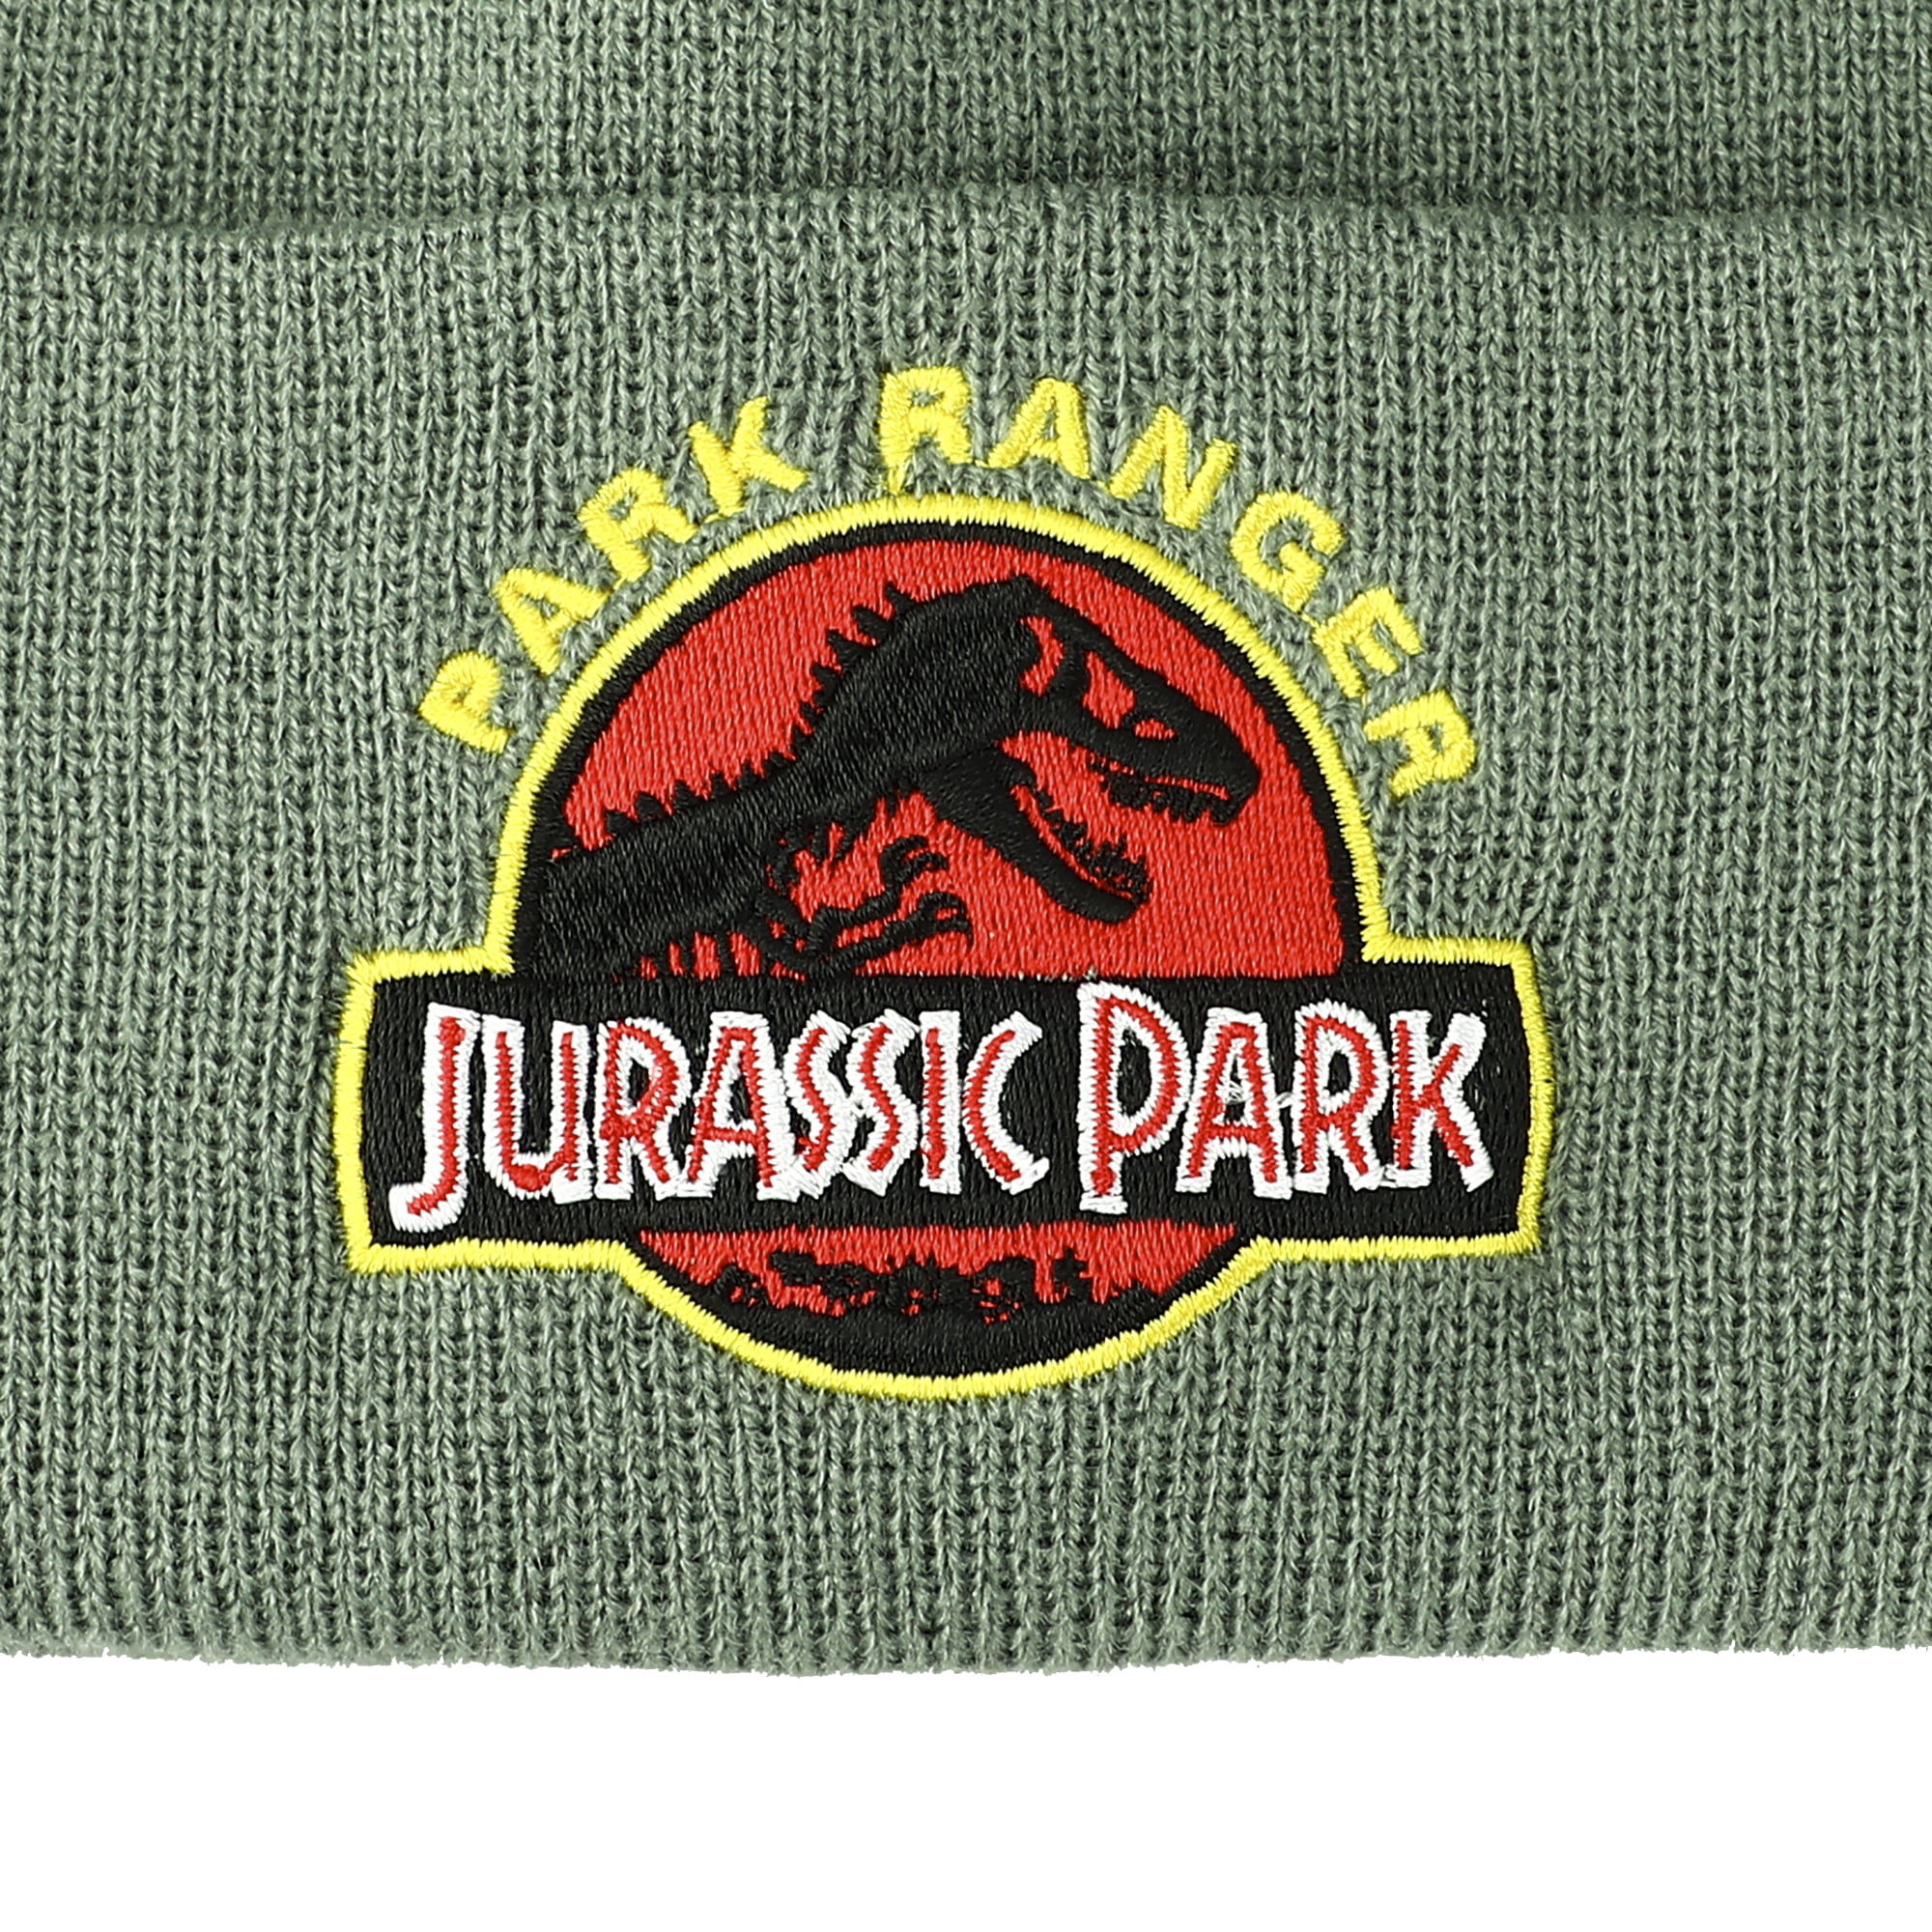 Jurassic Park Ranger Embroidered Logo Cuffed Beanie hat Knitted Green